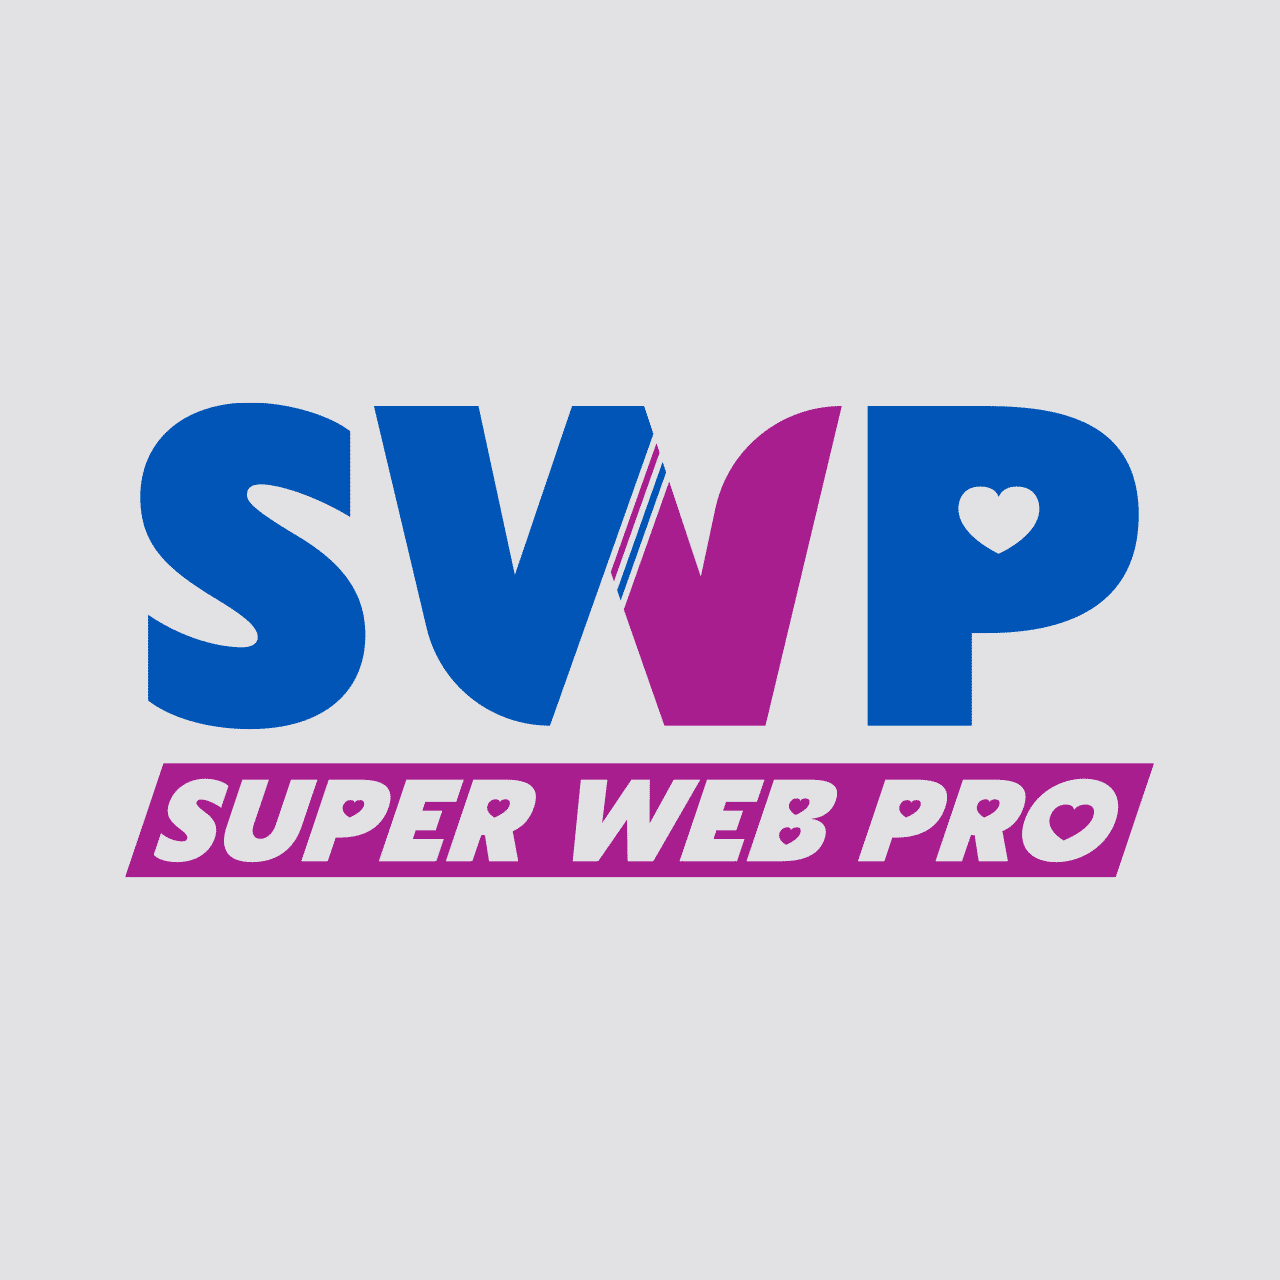 Super Web Pro